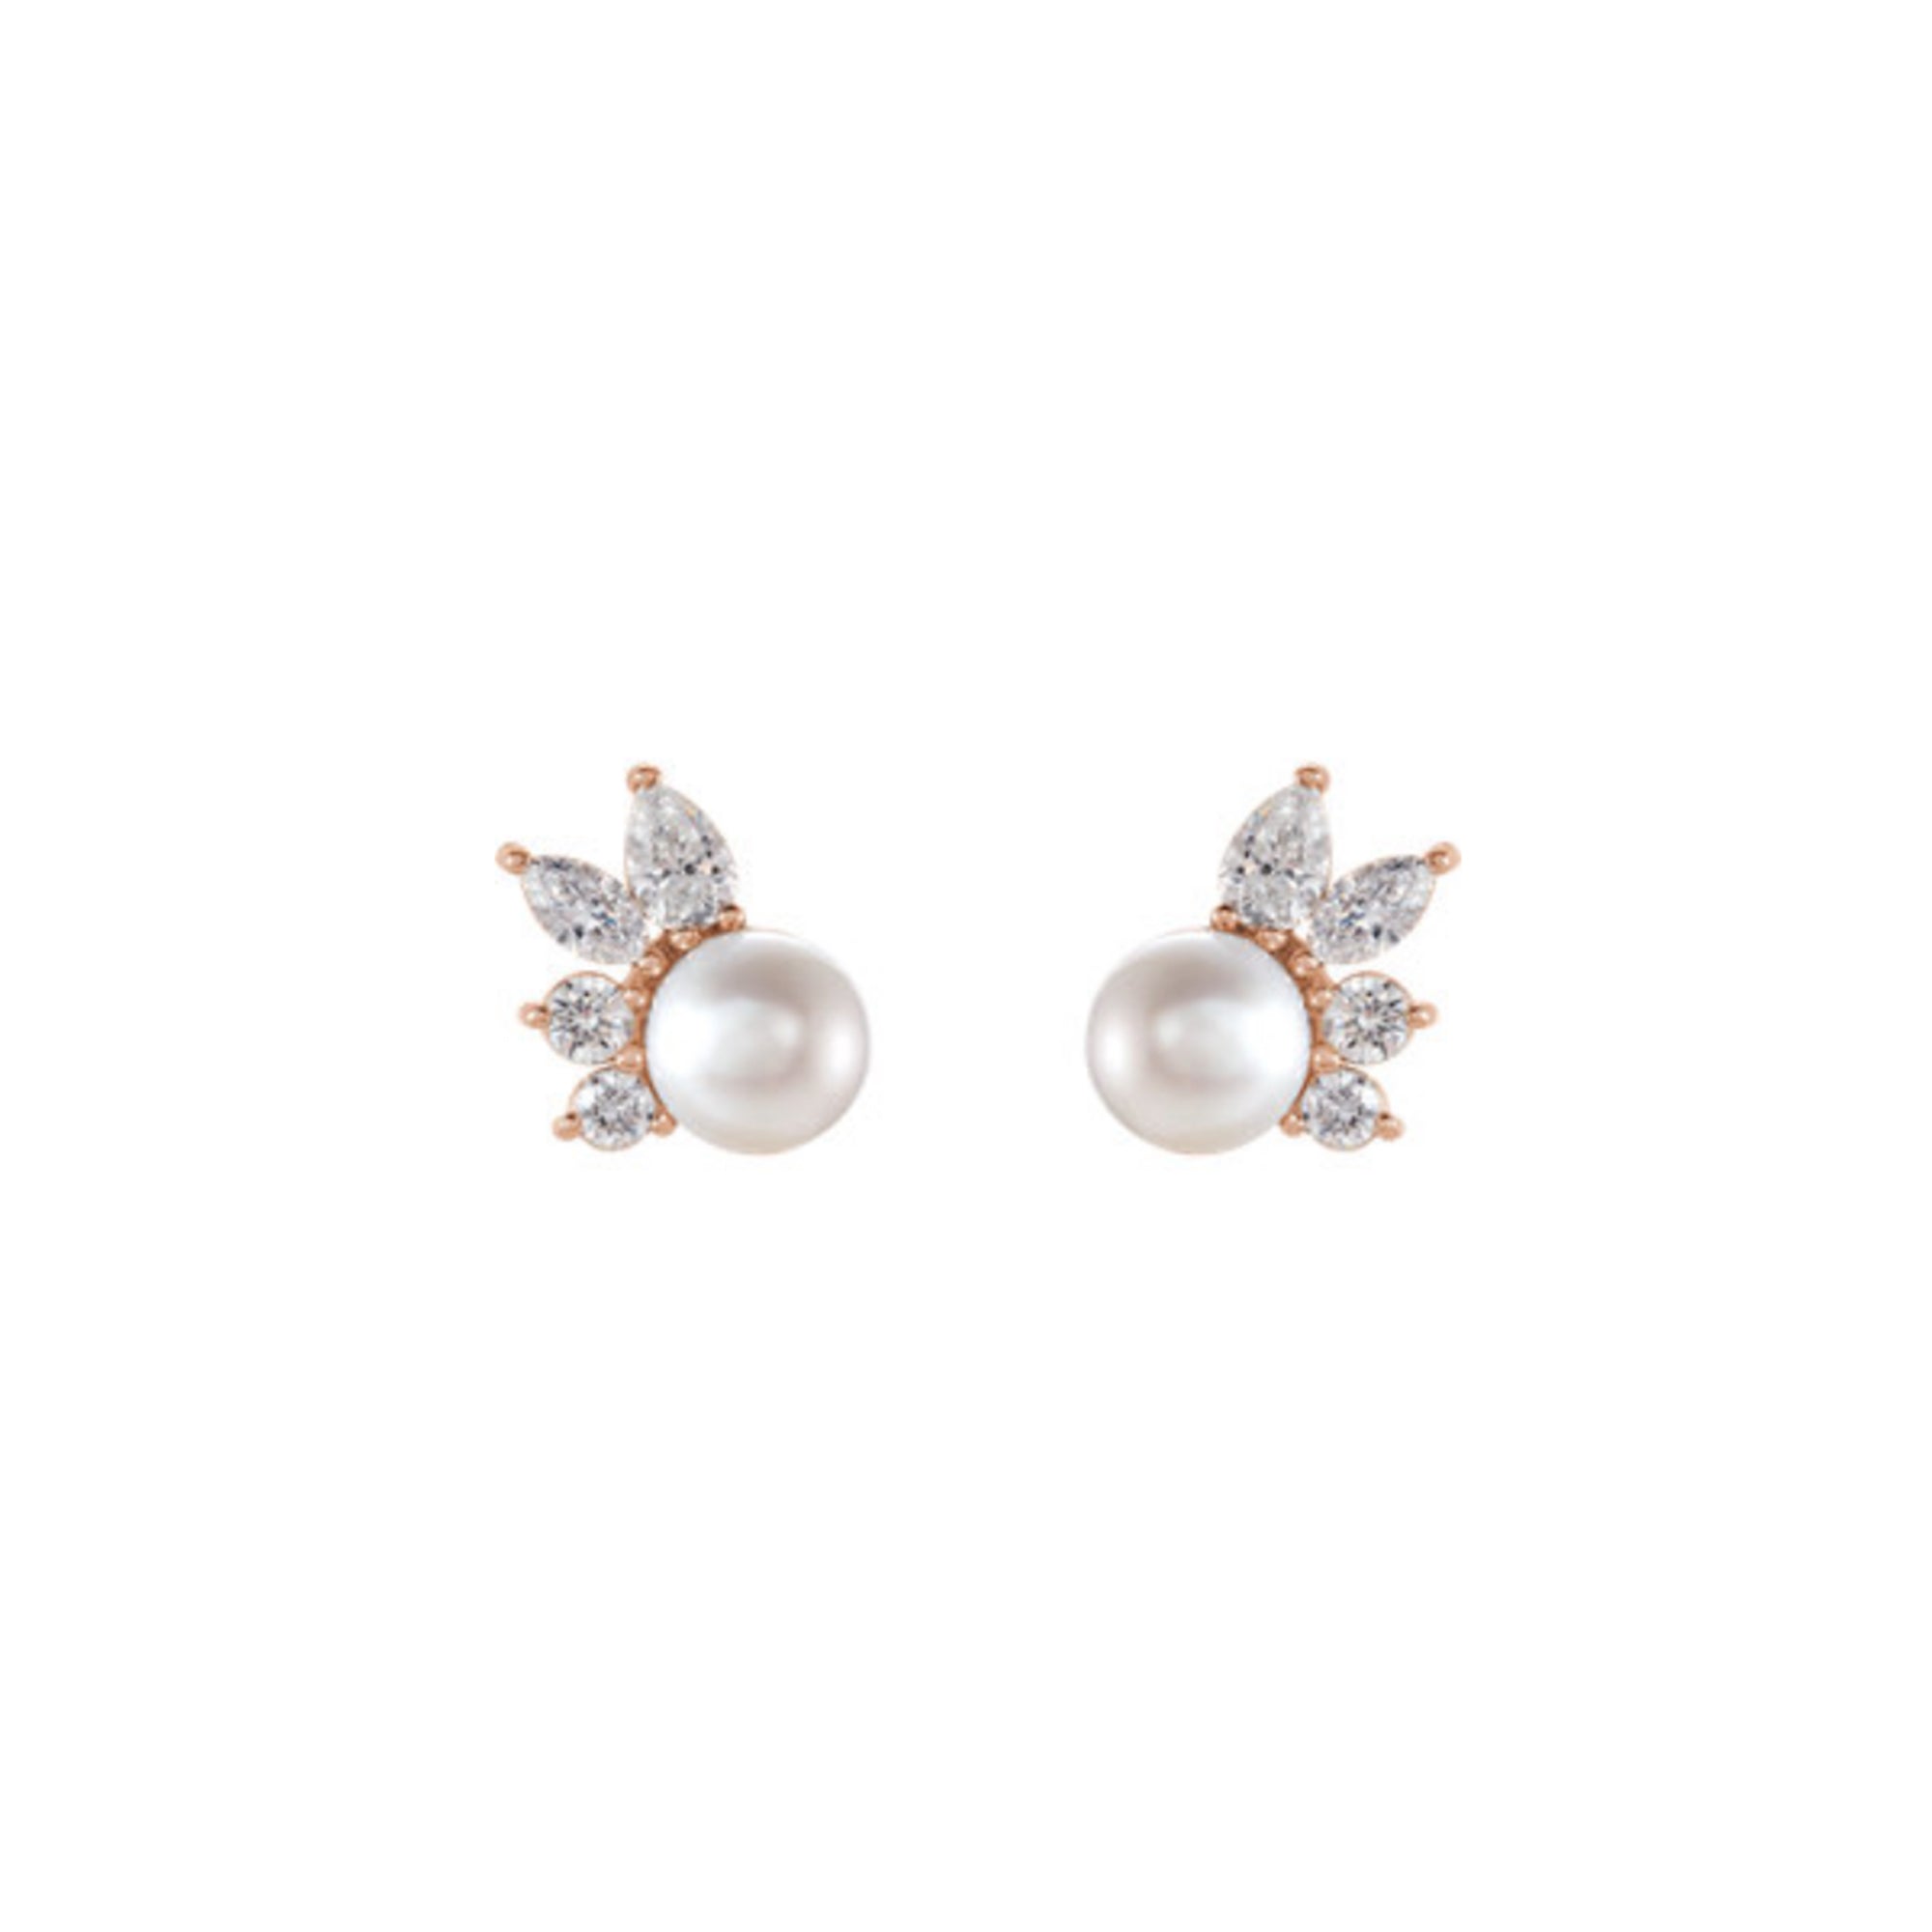 Akoya Pearl Diamond Fan Earrings in White, Yellow or Rose Gold - Talisman Collection Fine Jewelers